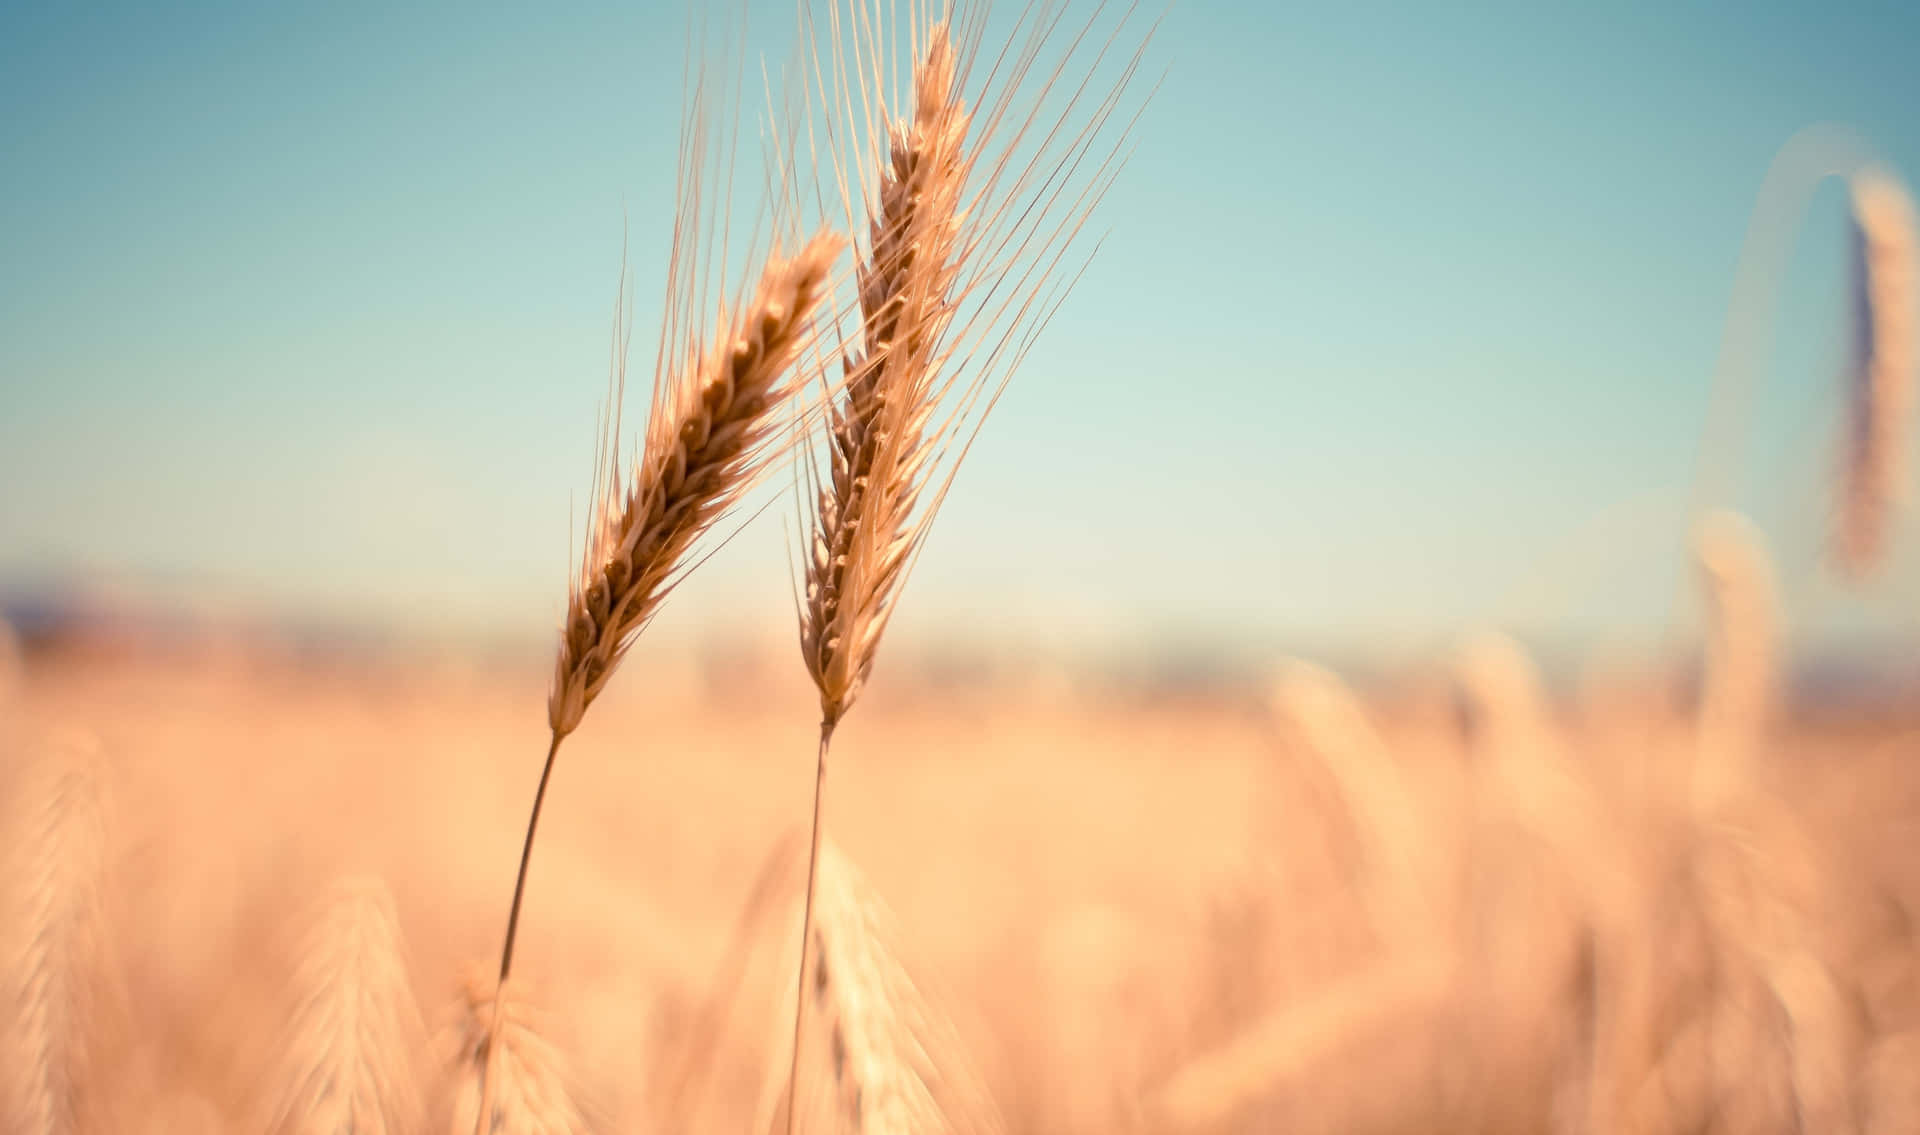 A field of ripe golden wheat basks in the summer sun